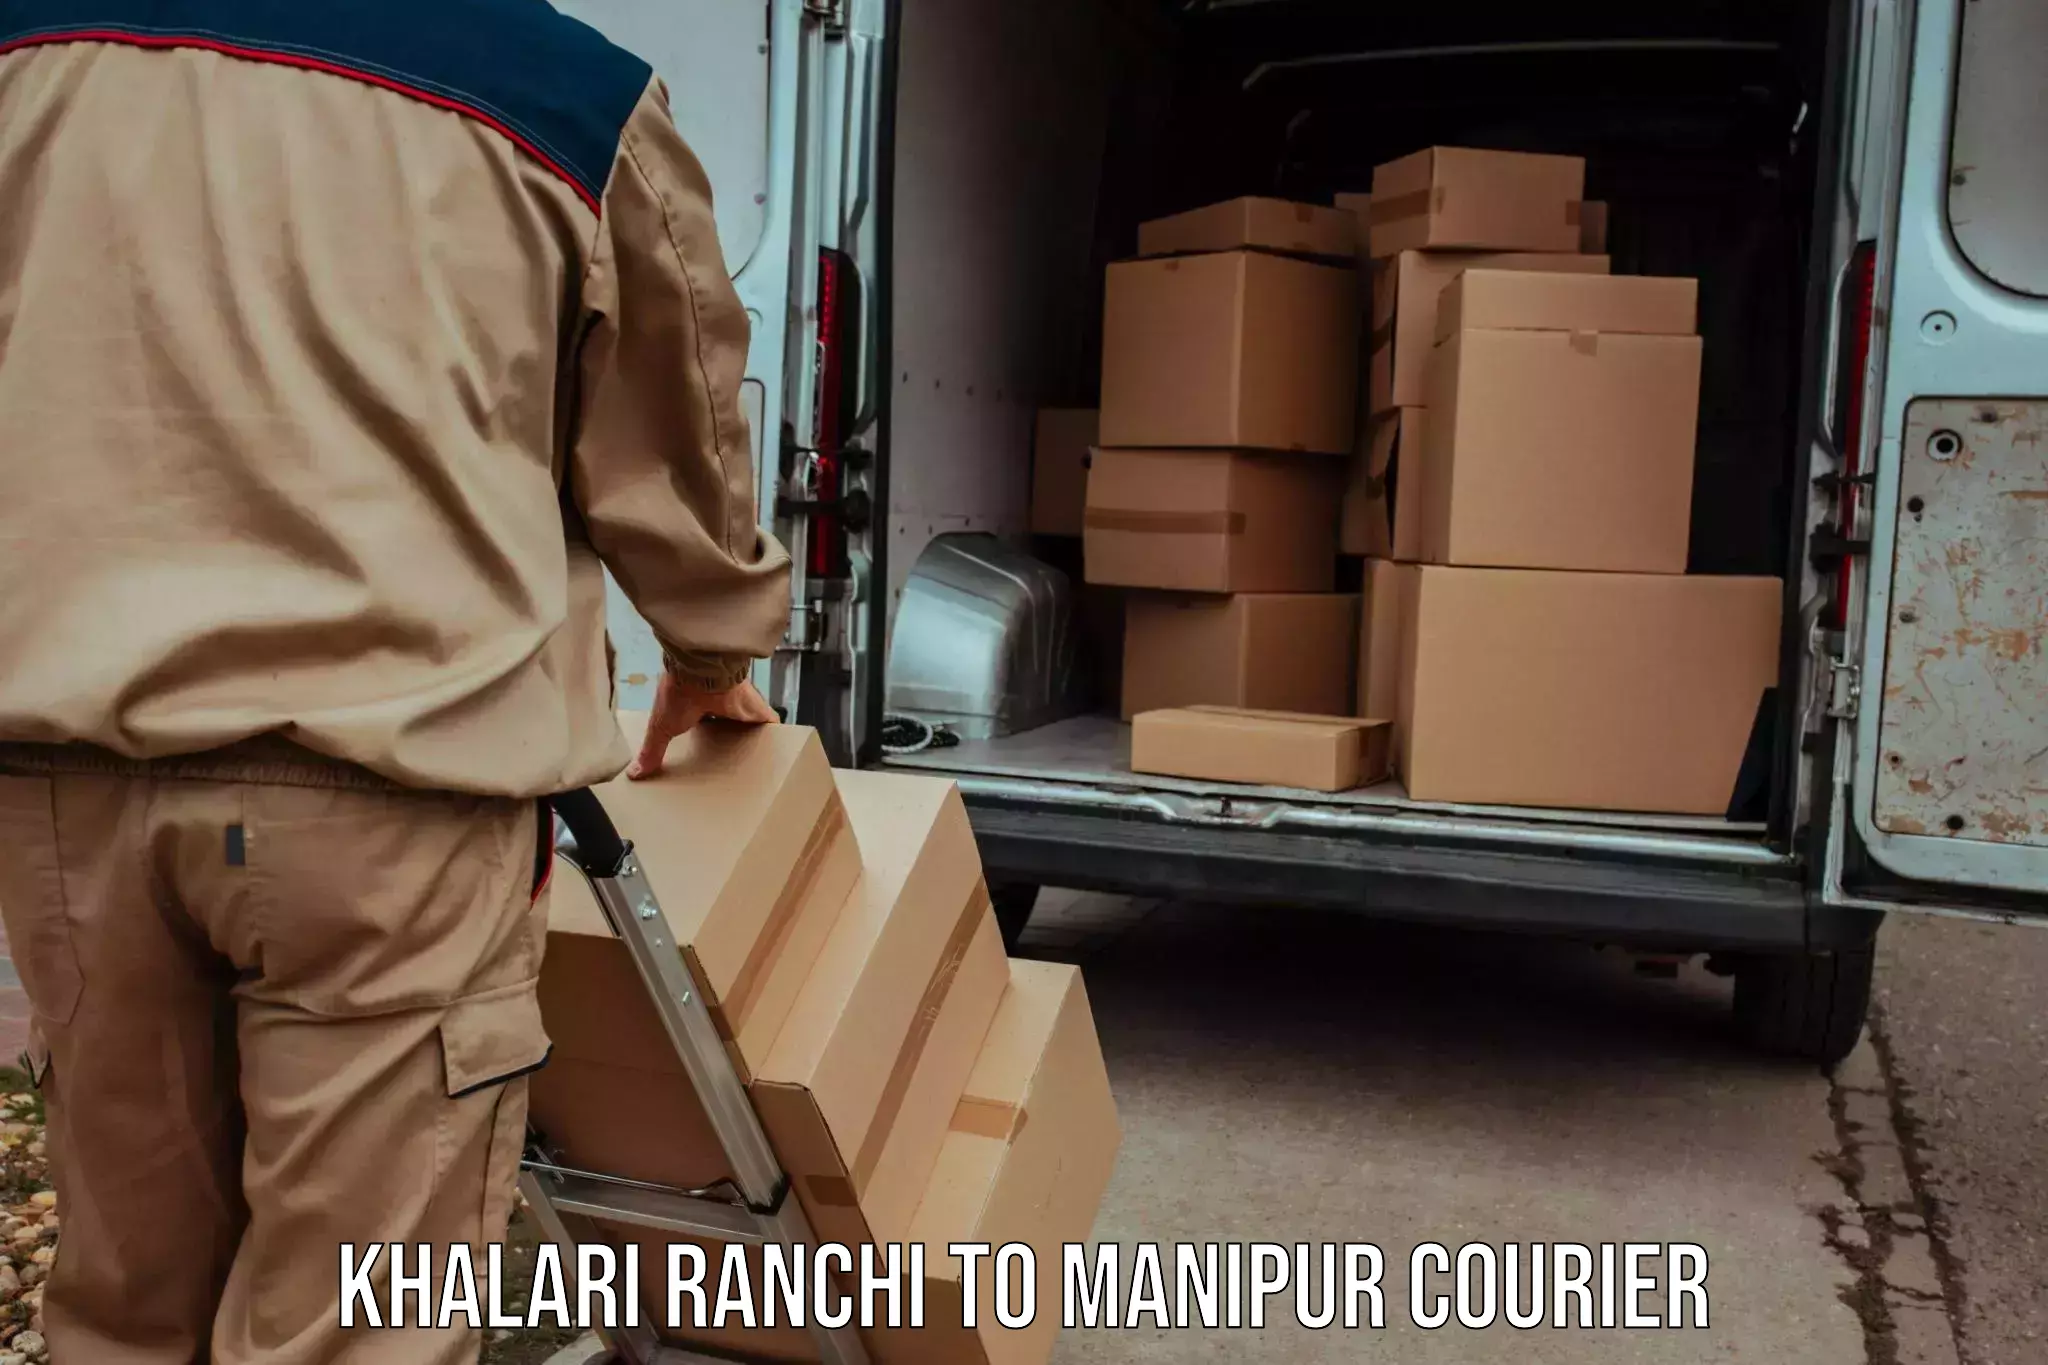 Next-day freight services Khalari Ranchi to Kakching